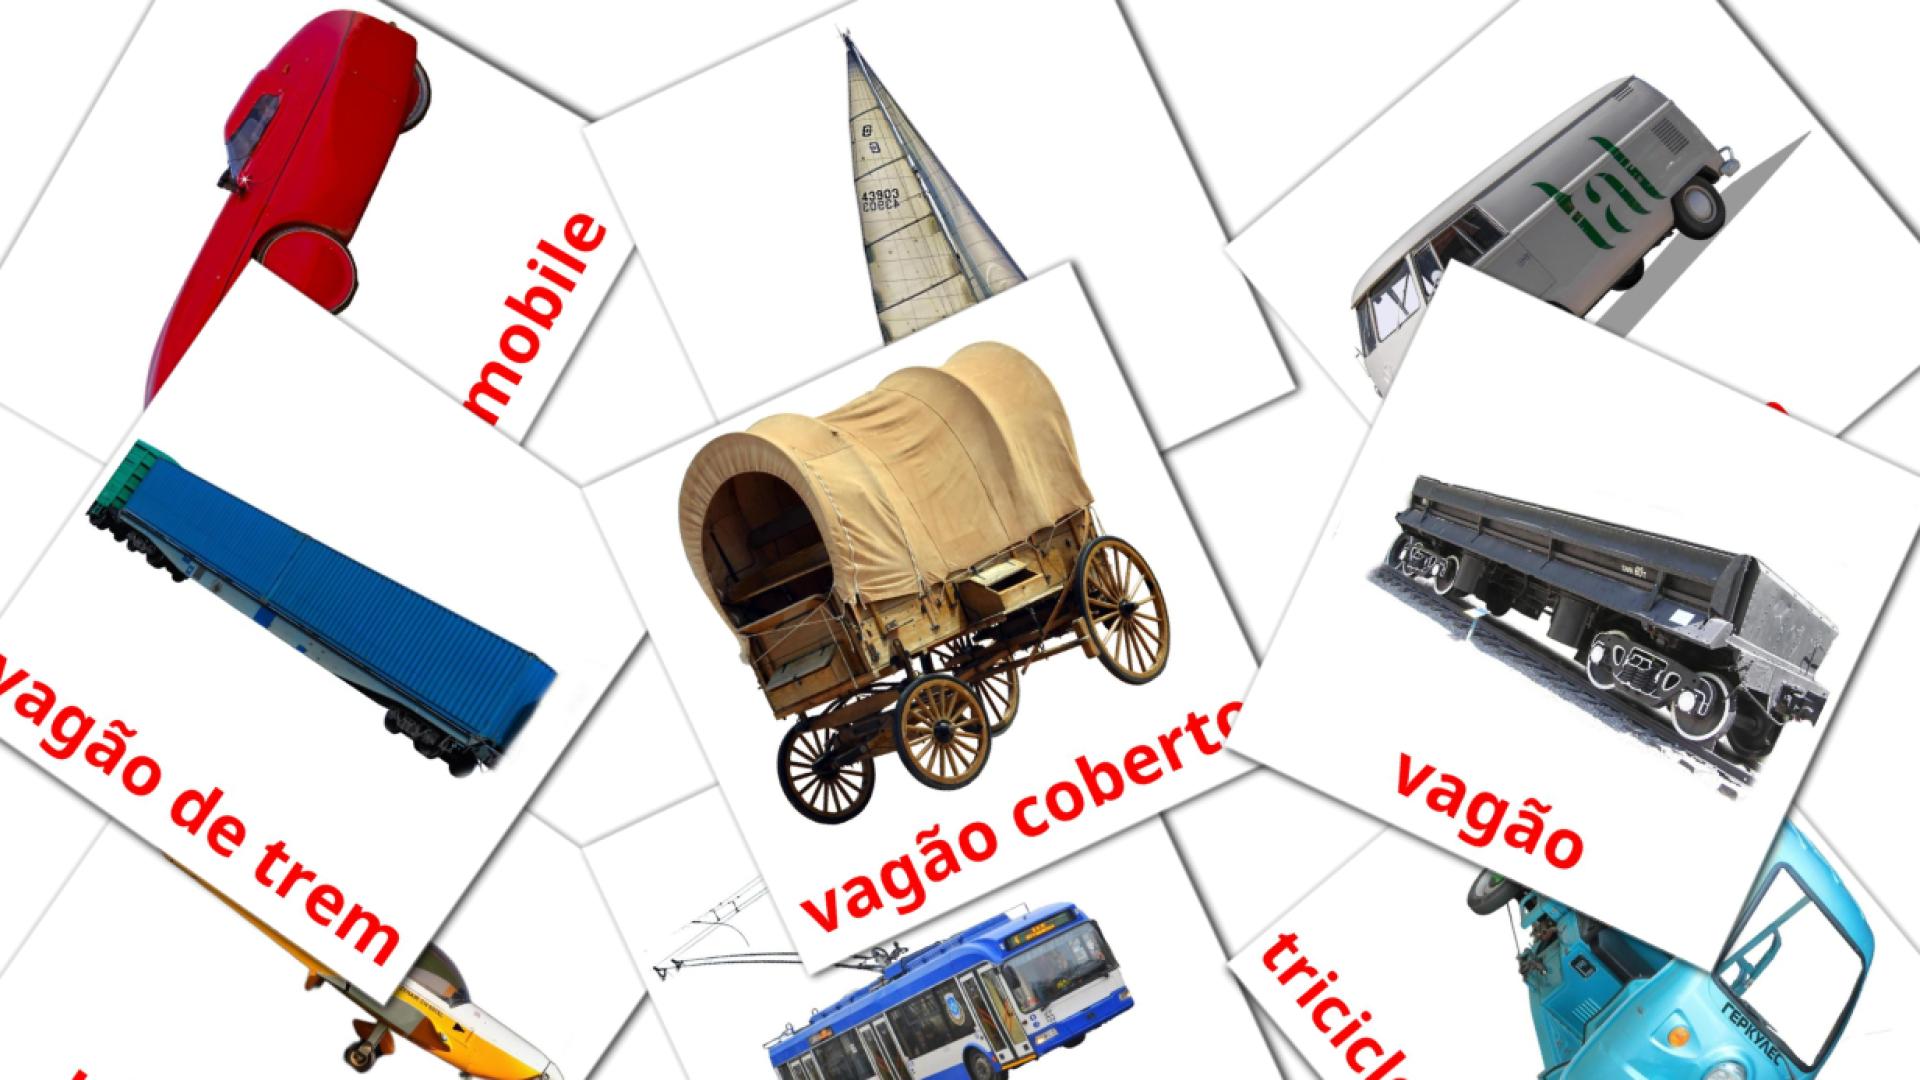 Transporte portuguese vocabulary flashcards